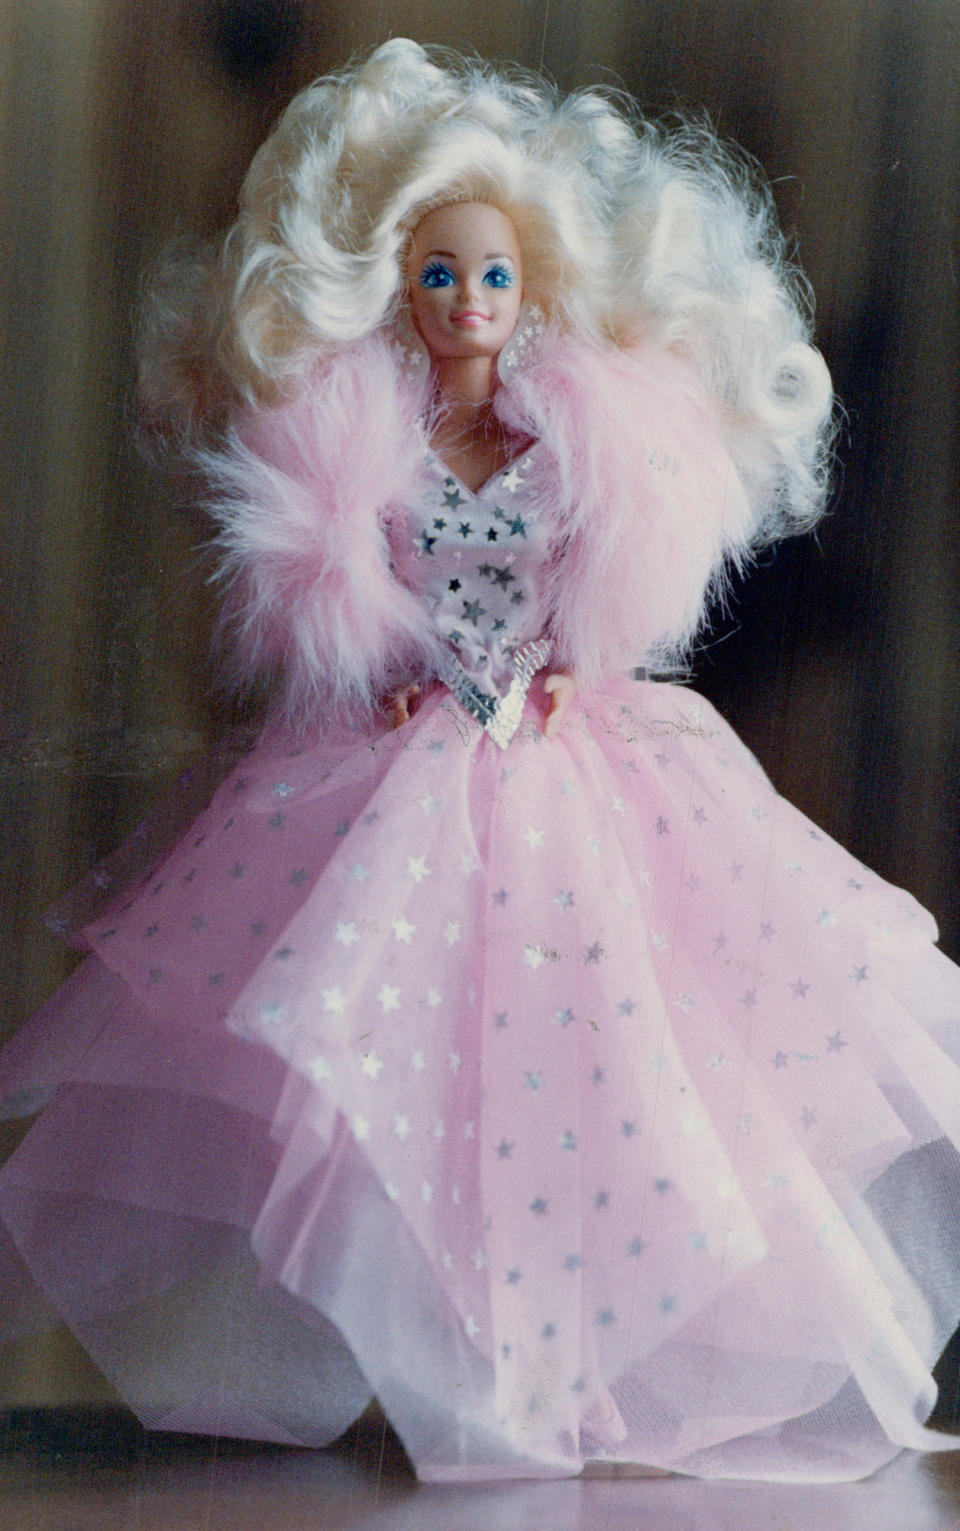 Super Star Barbie, circa 1989.&nbsp;